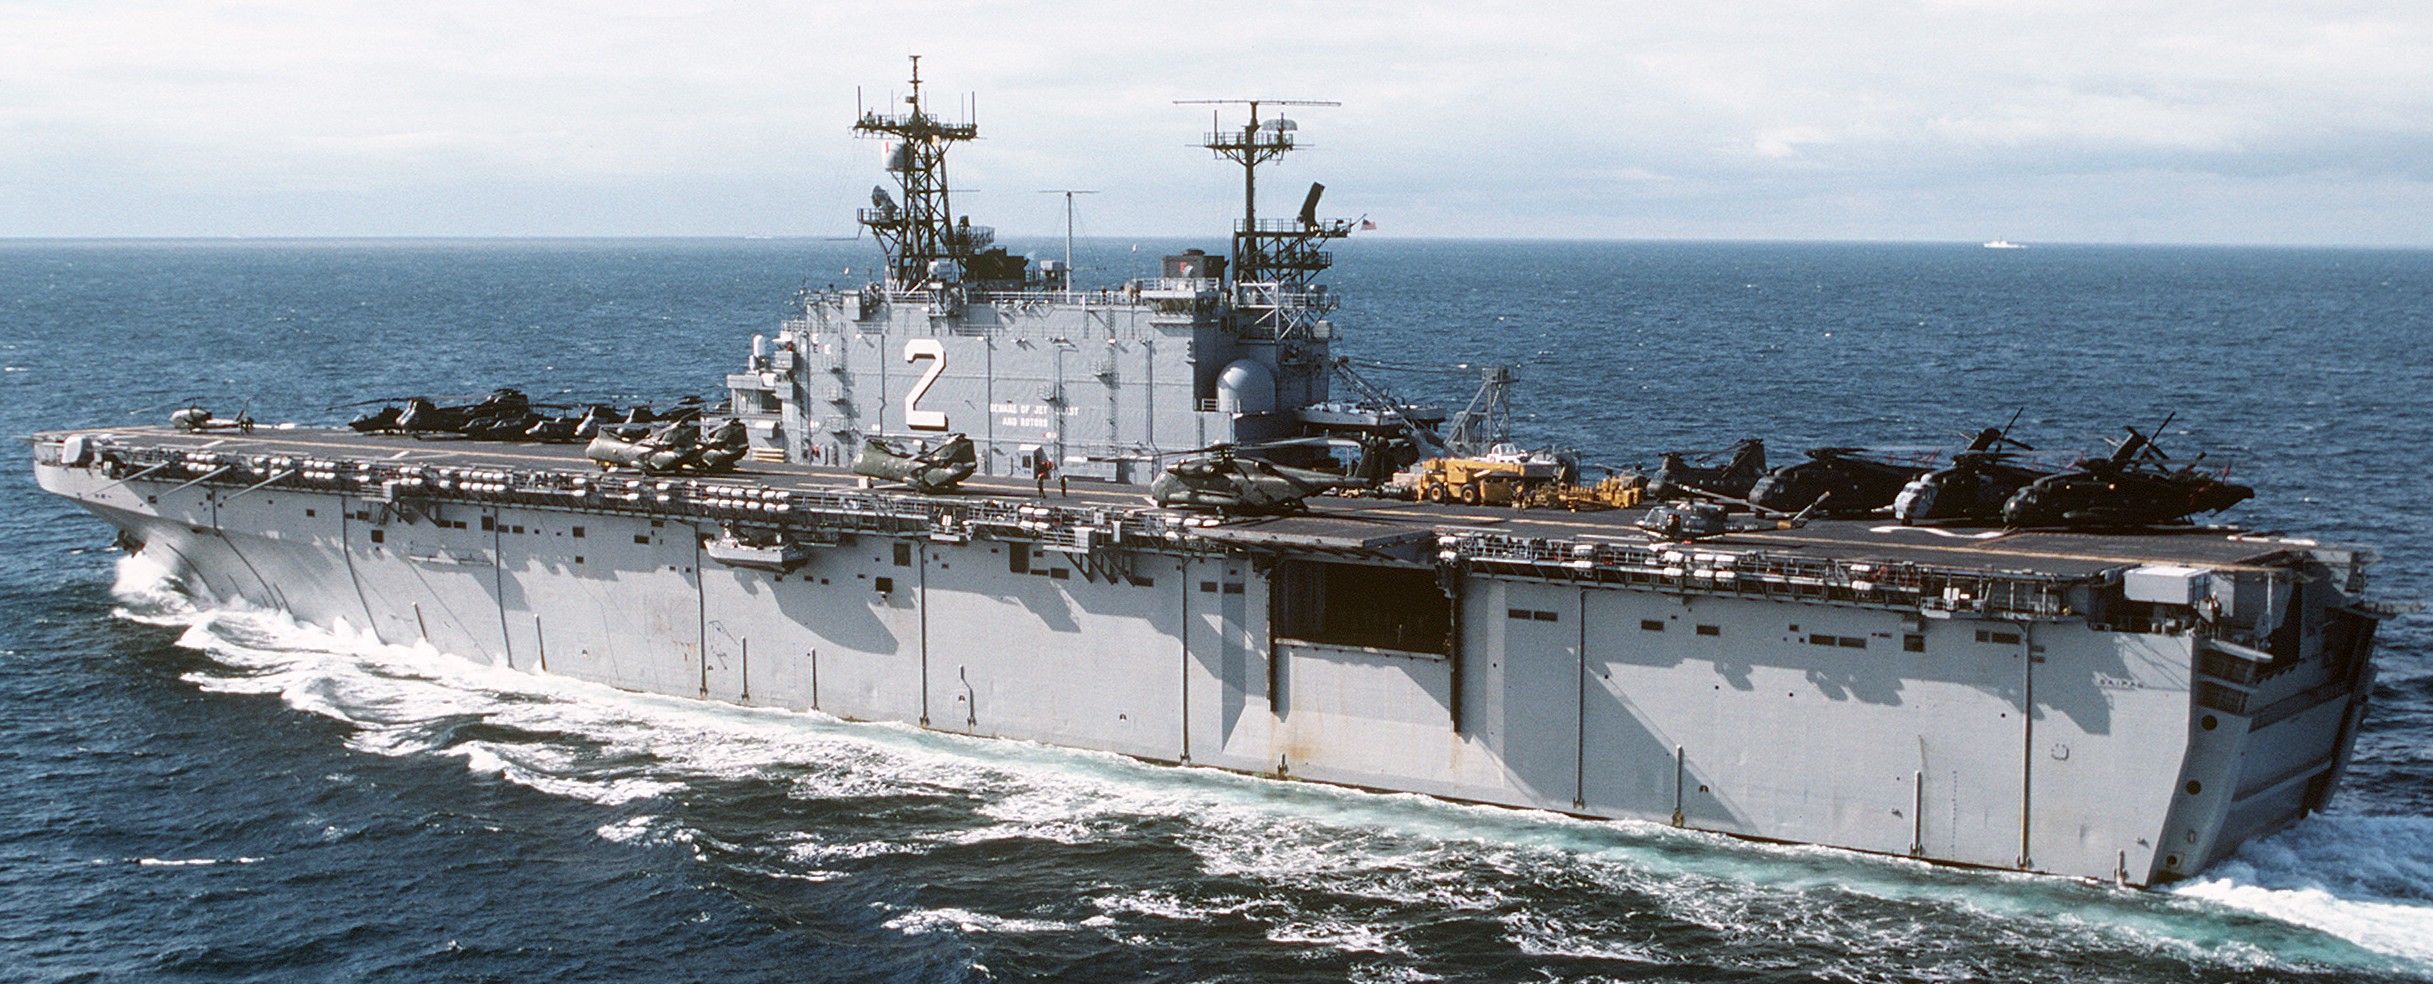 lha-2 uss saipan tarawa class amphibious assault ship us navy 22nd mau hmm-162 usmc nato exercise northern wedding 51